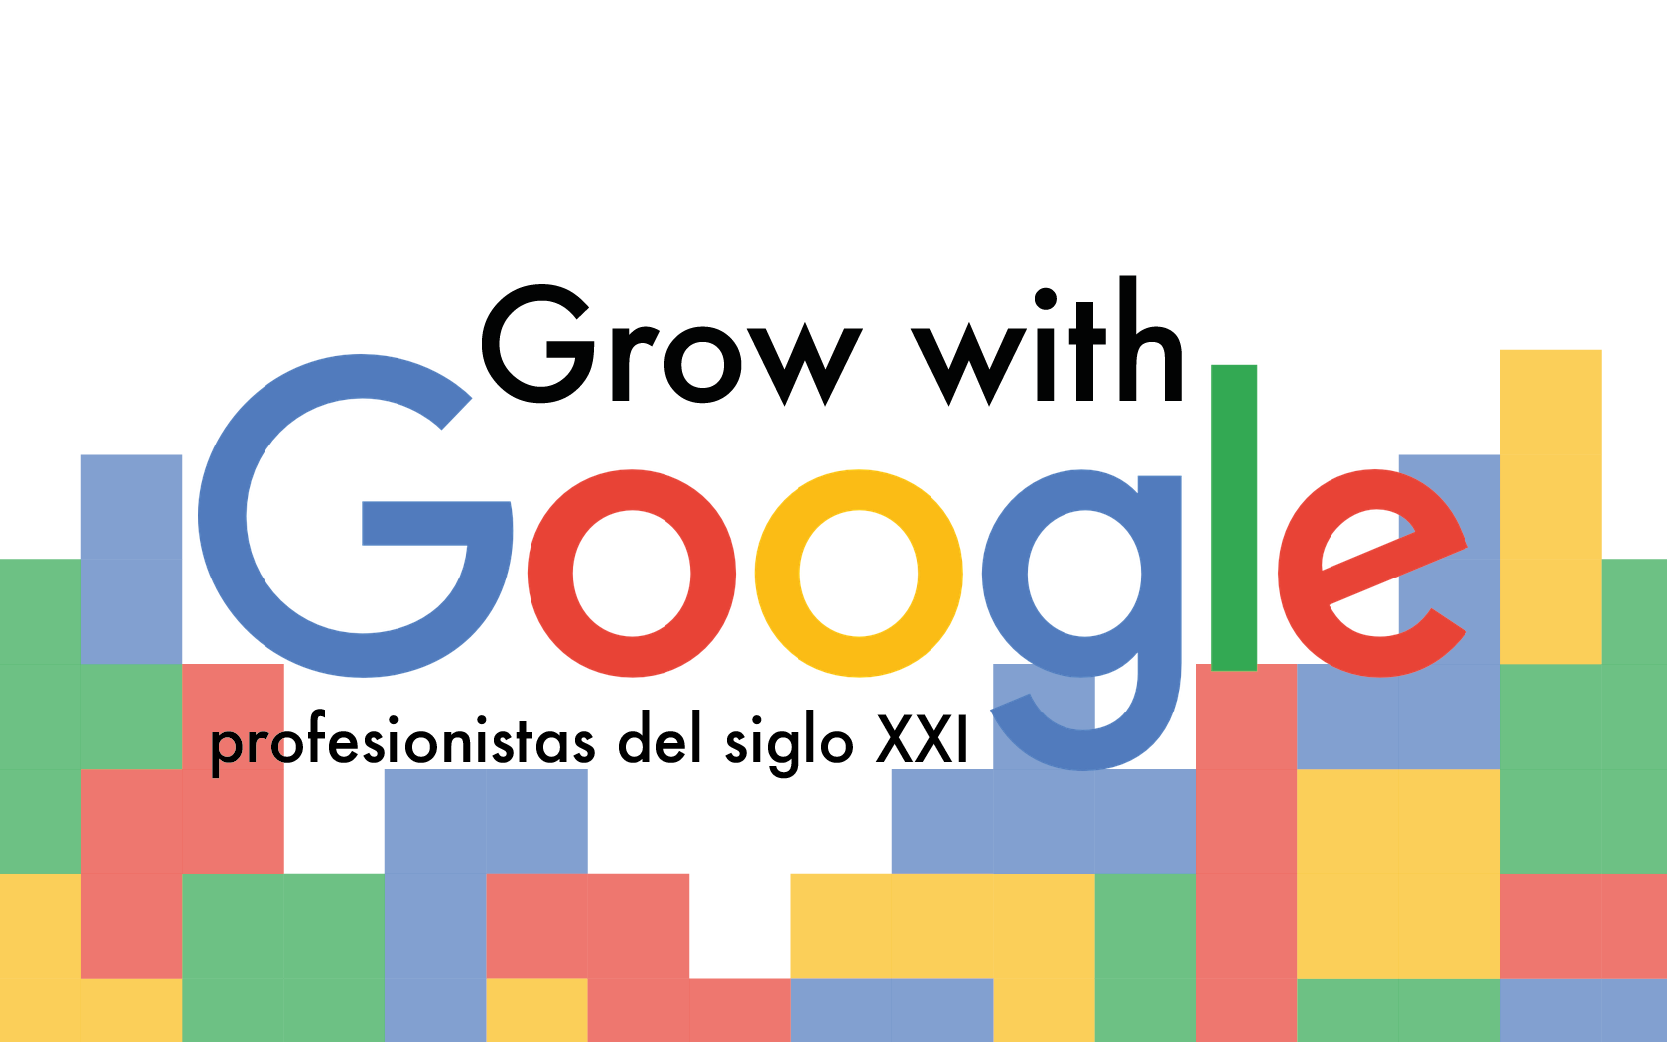 Grow with google